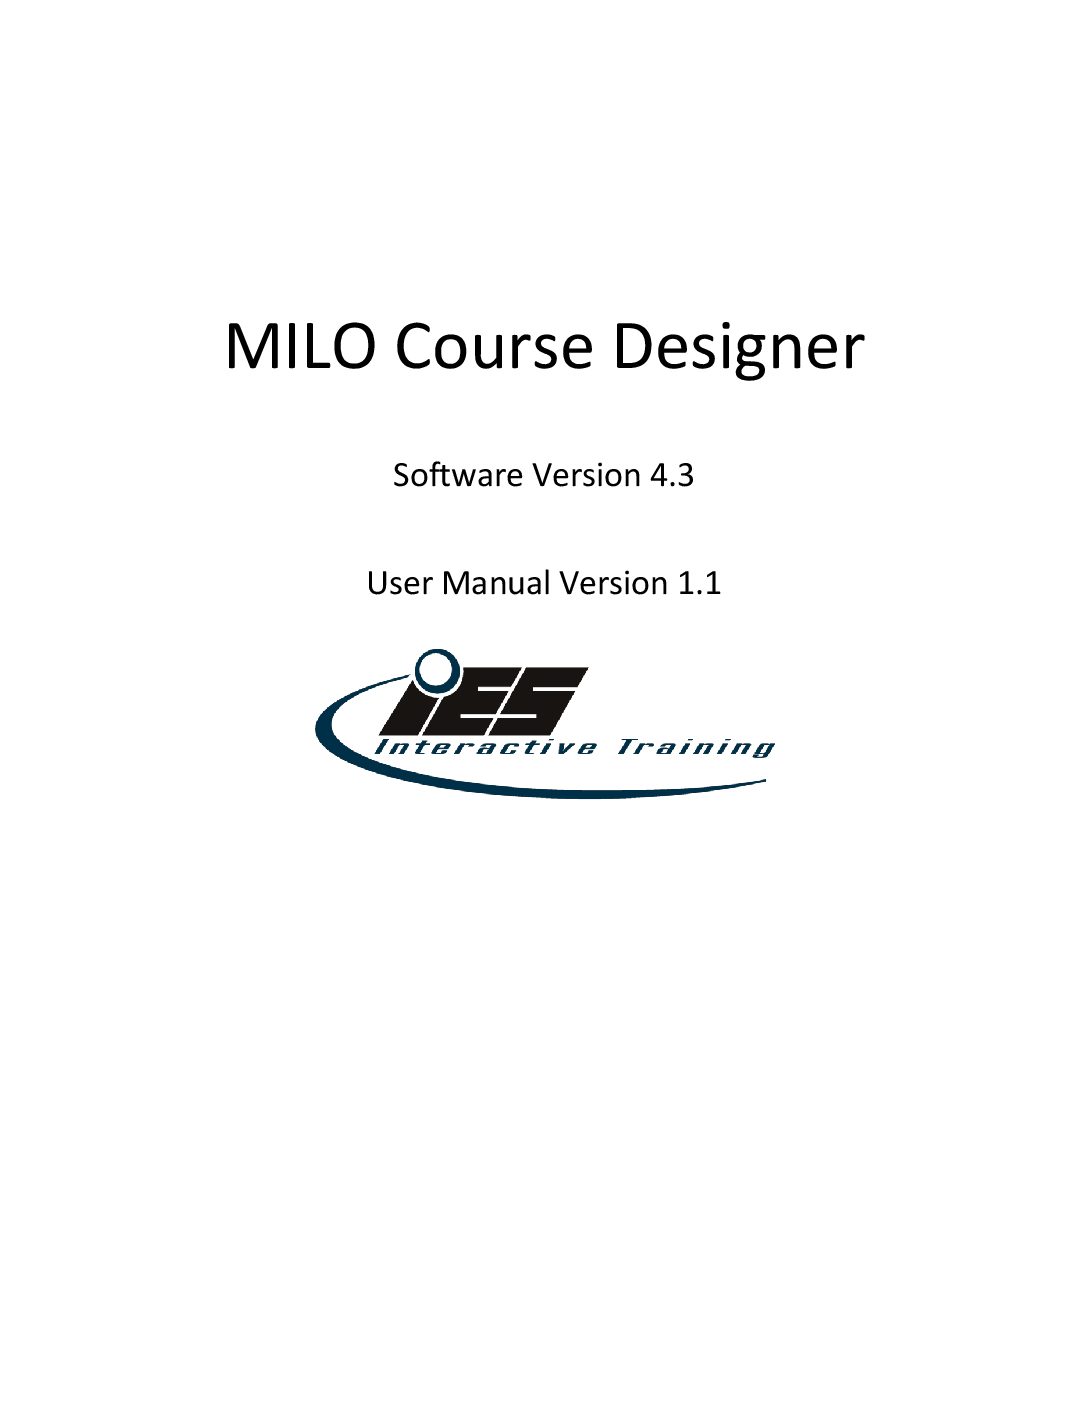 MILO Course Designer Software User Guide